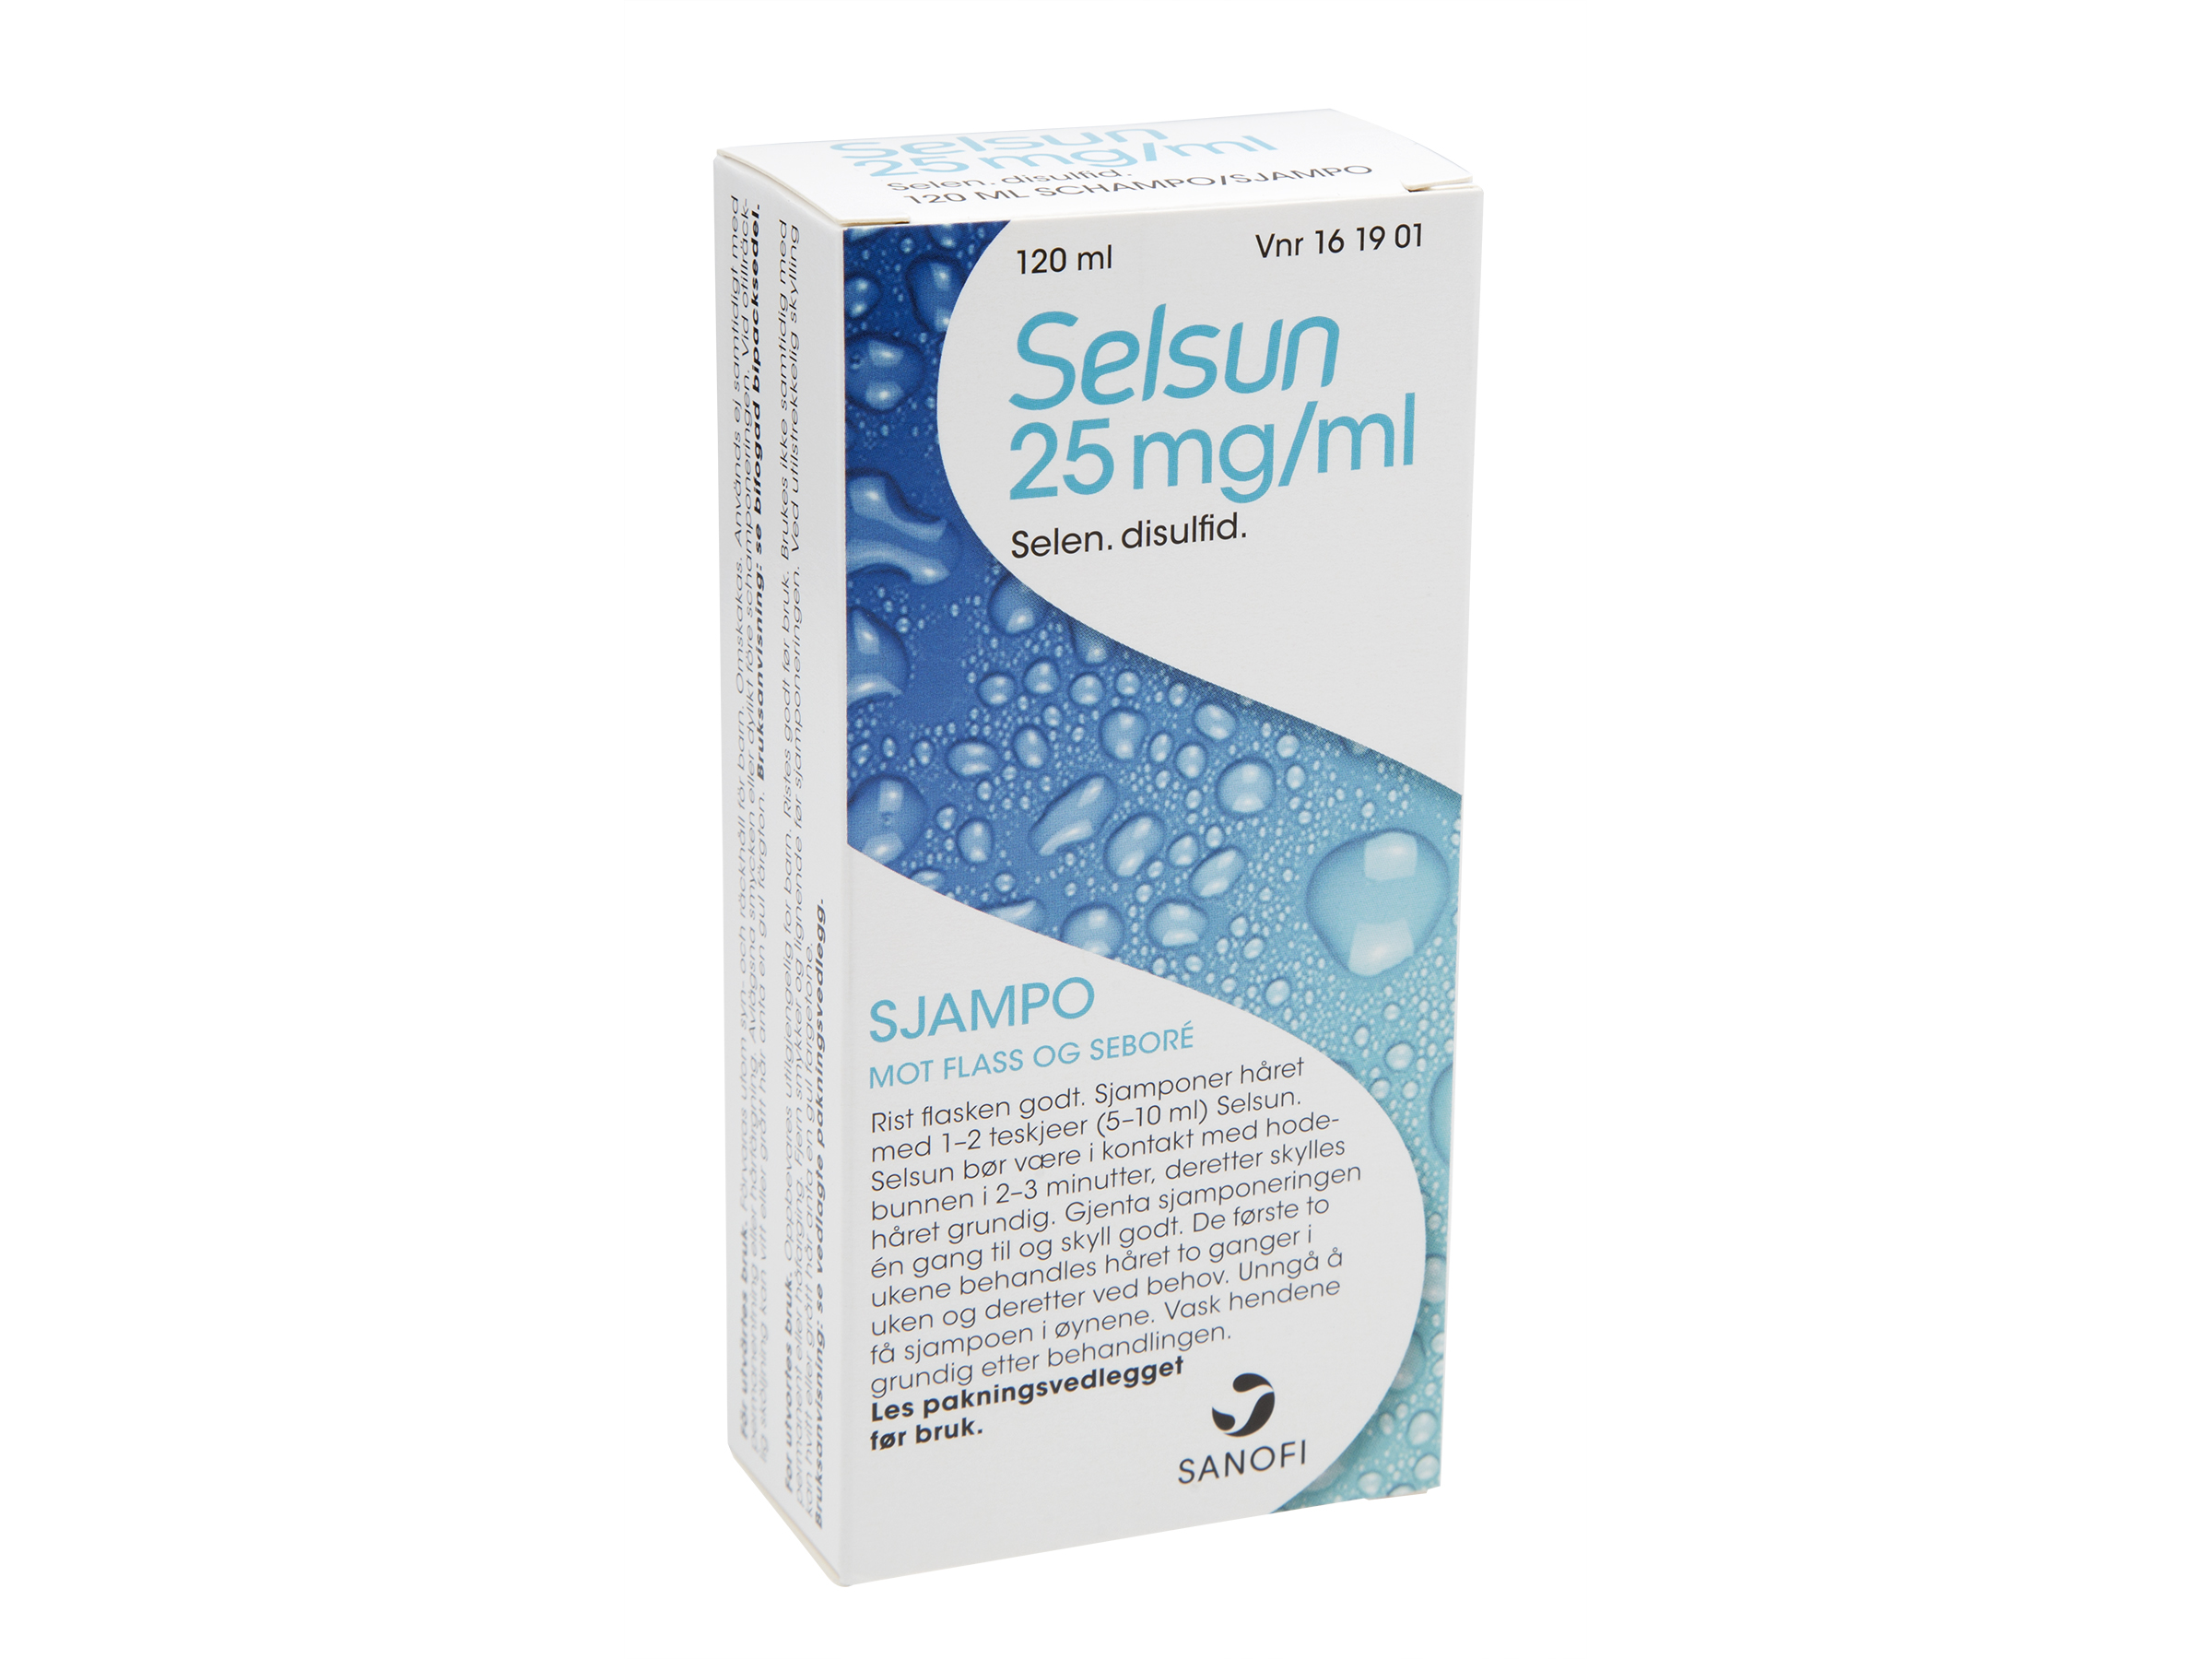 Selsun Shampoo 25mg/ml, 120 ml.